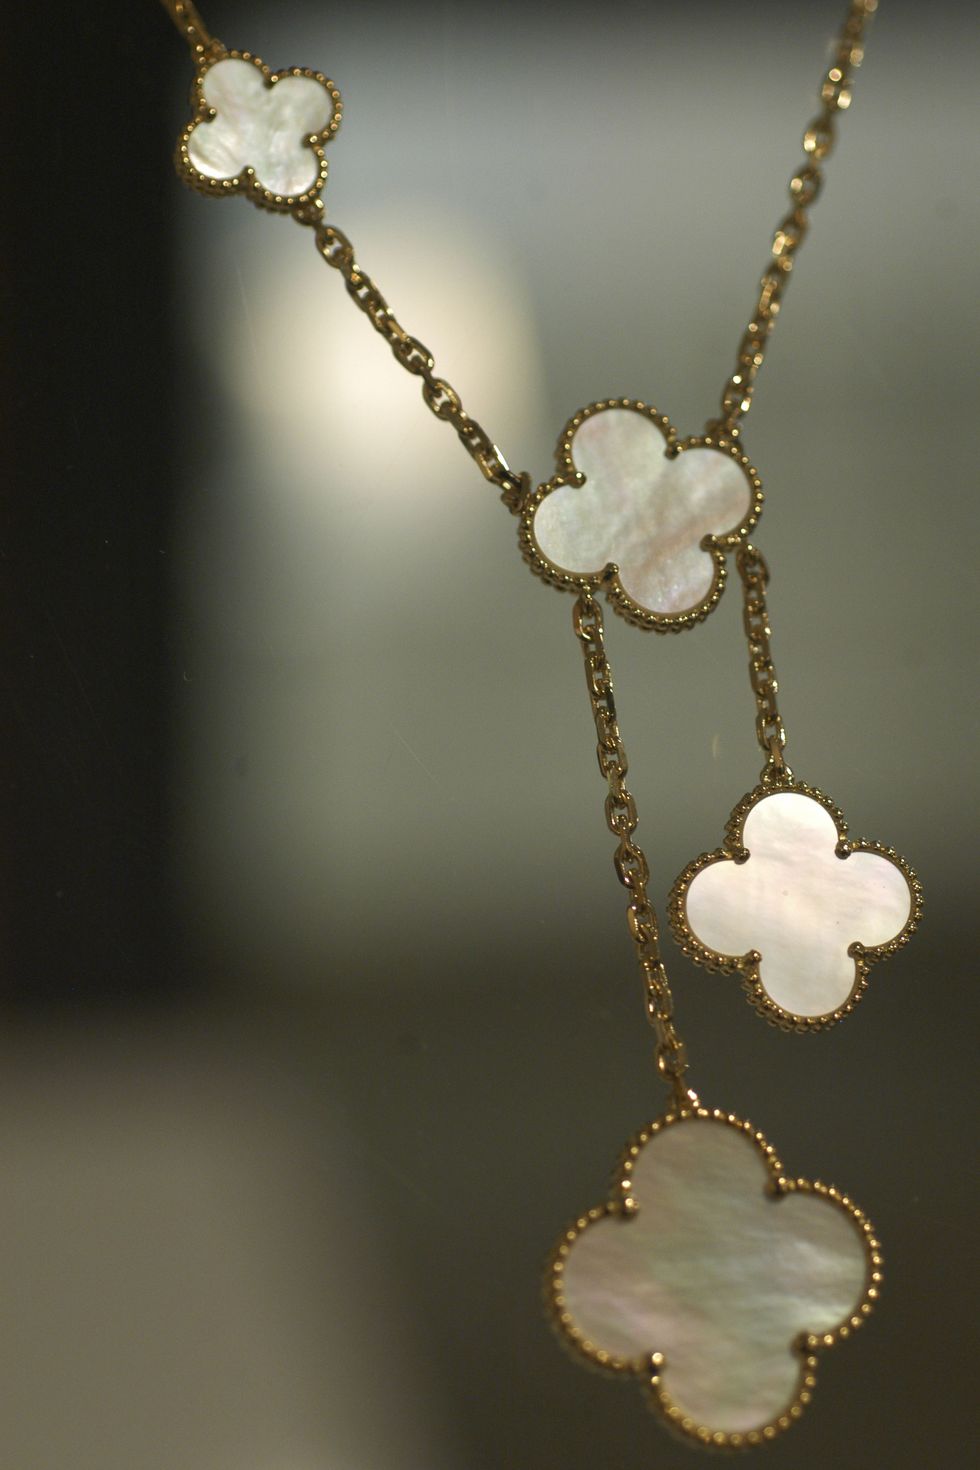 How Van Cleef & Arpels Jewelry Makes Alhambra